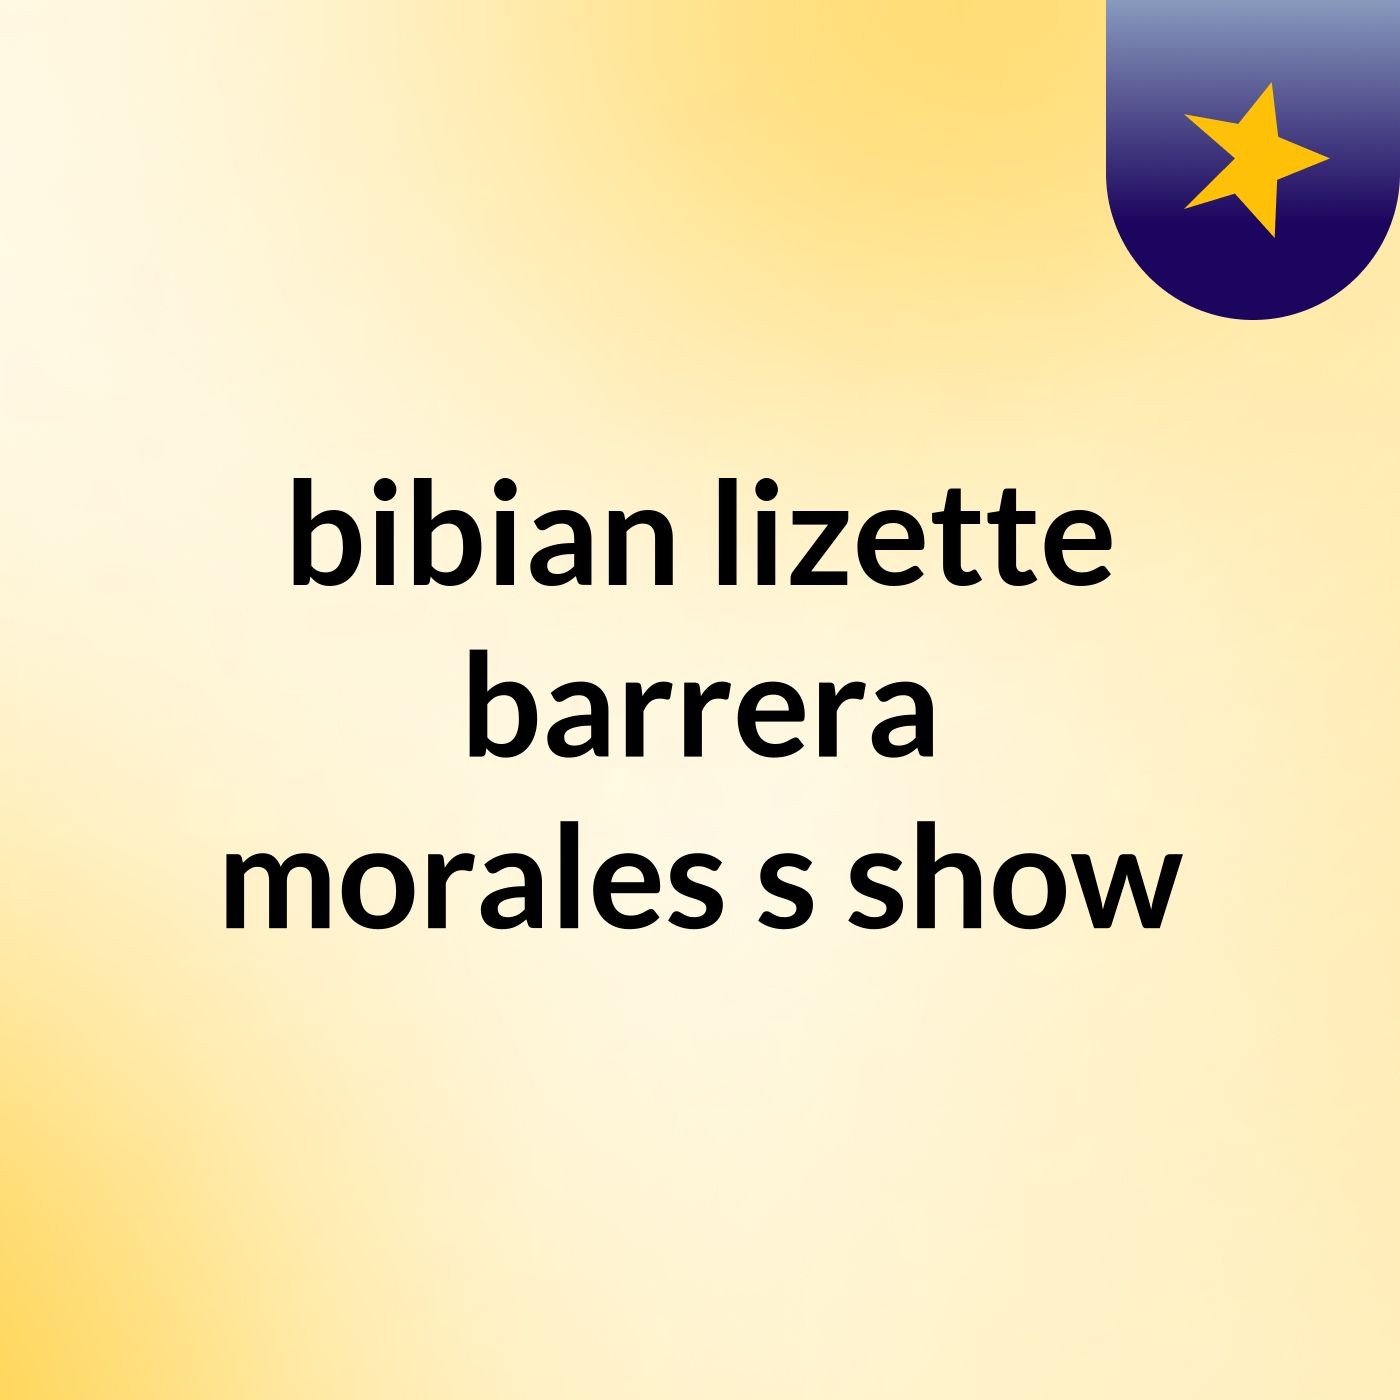 bibian lizette barrera morales's show